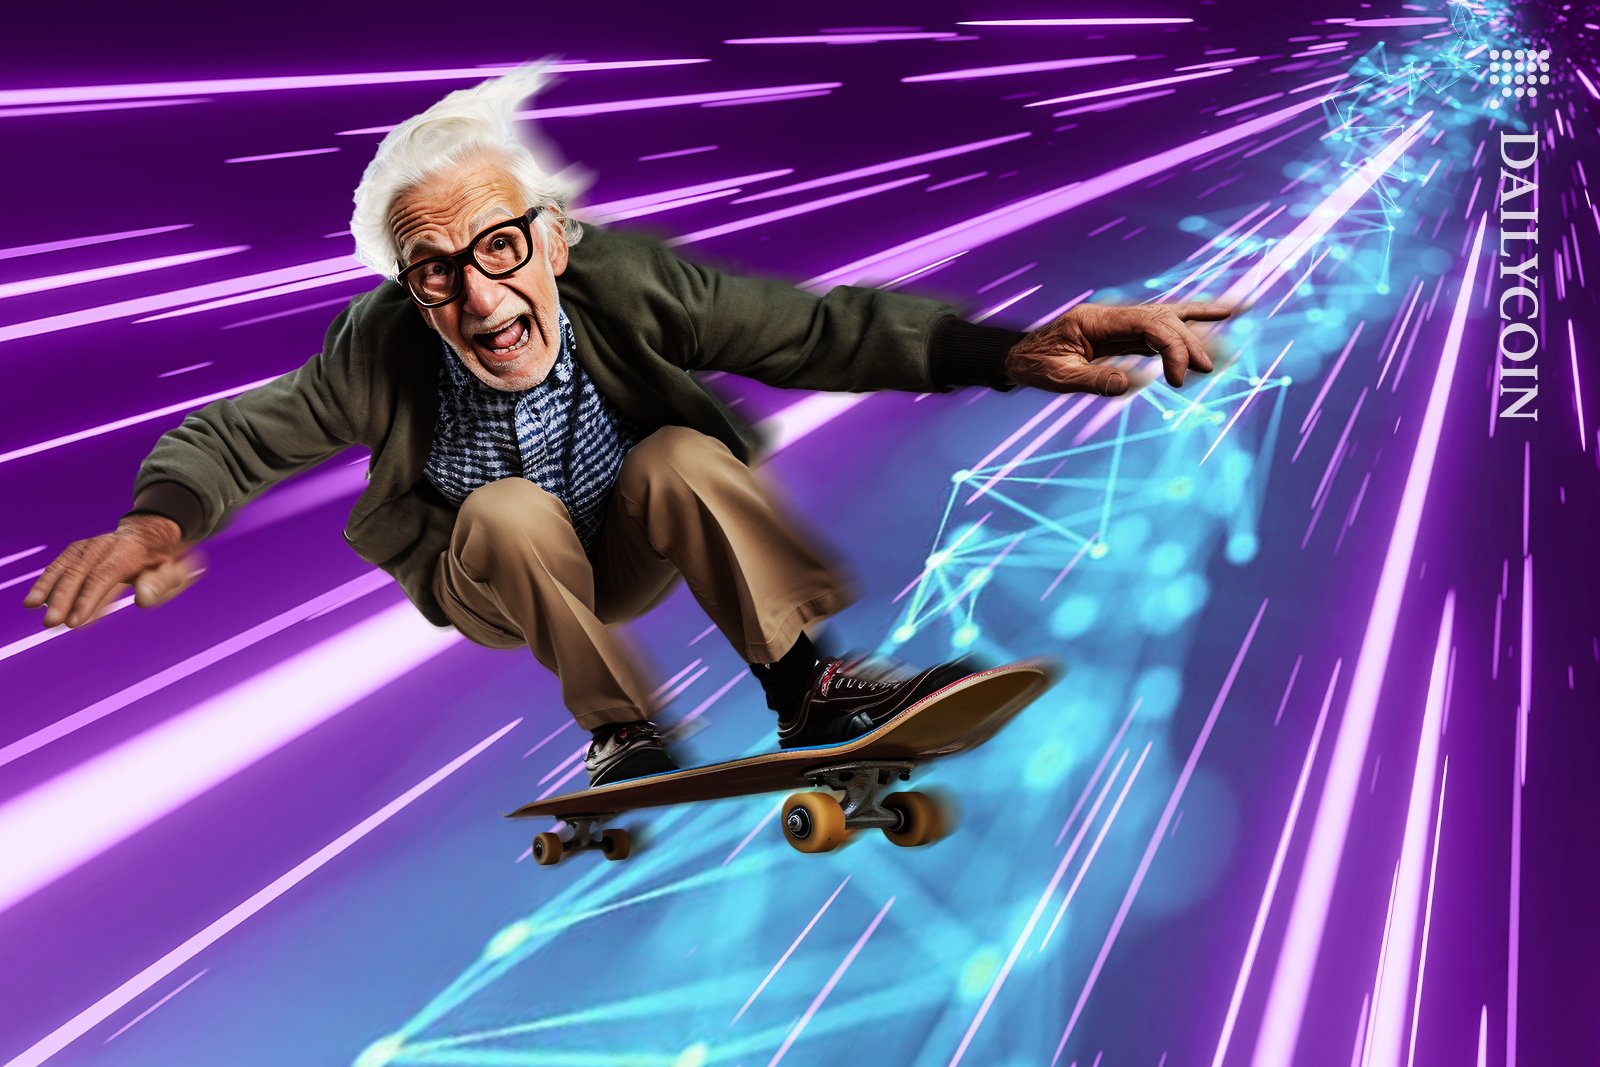 Elderly man riding a skateboard super fast on a DEFI network.